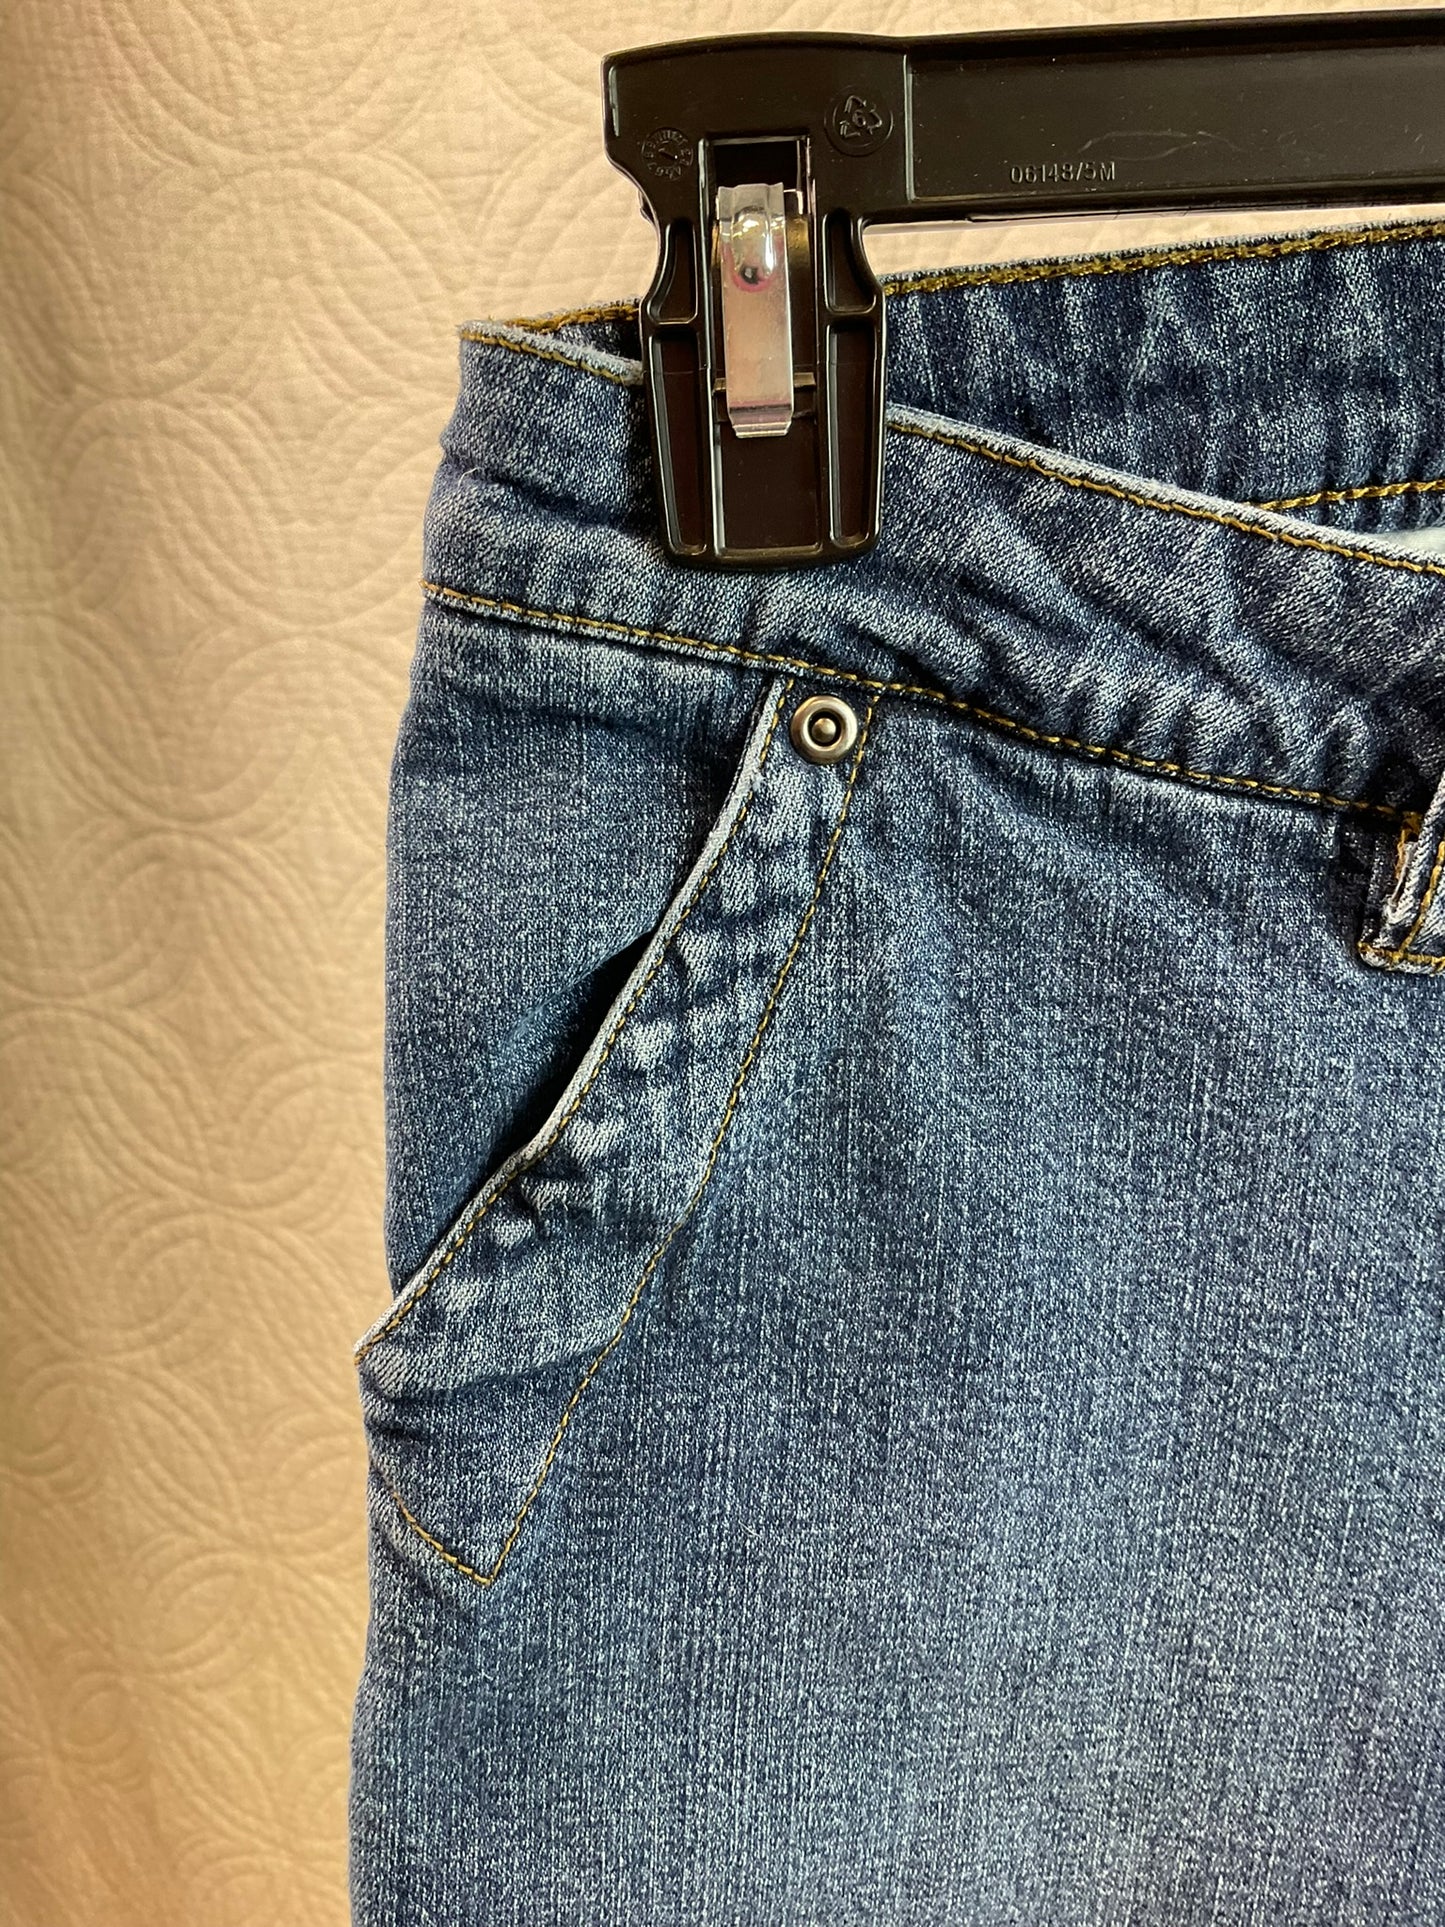 Magellan Medium Dark Wash Jean Shorts, Size 8